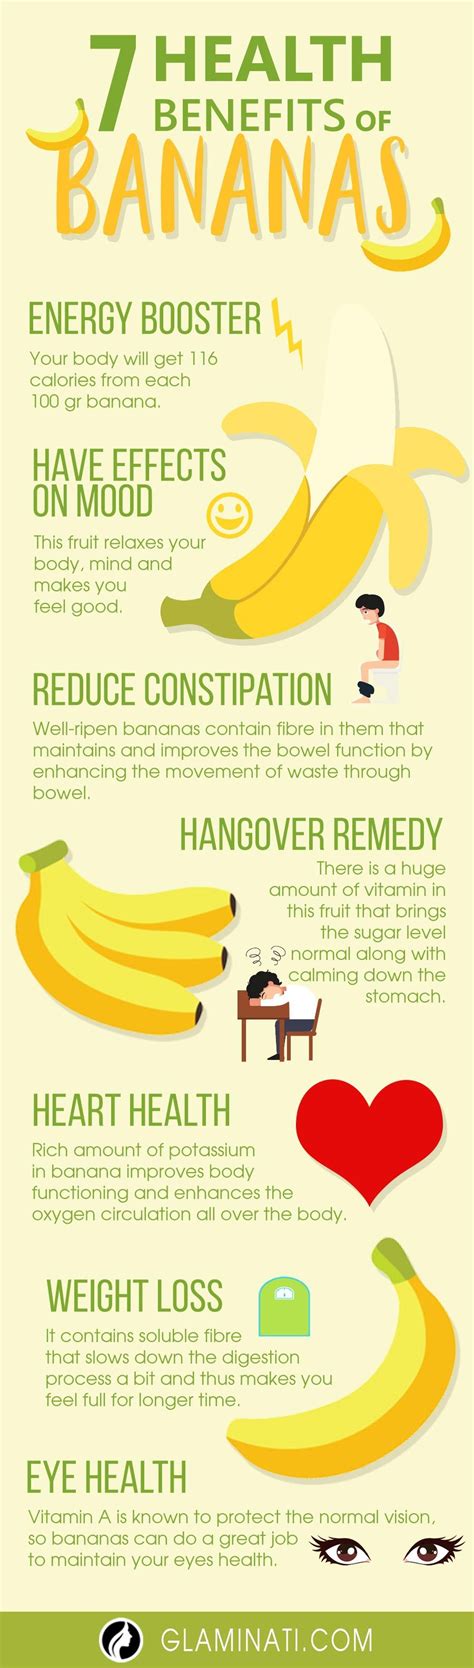 11 Powerful Health Benefits Of Bananas For You Banana Health Benefits